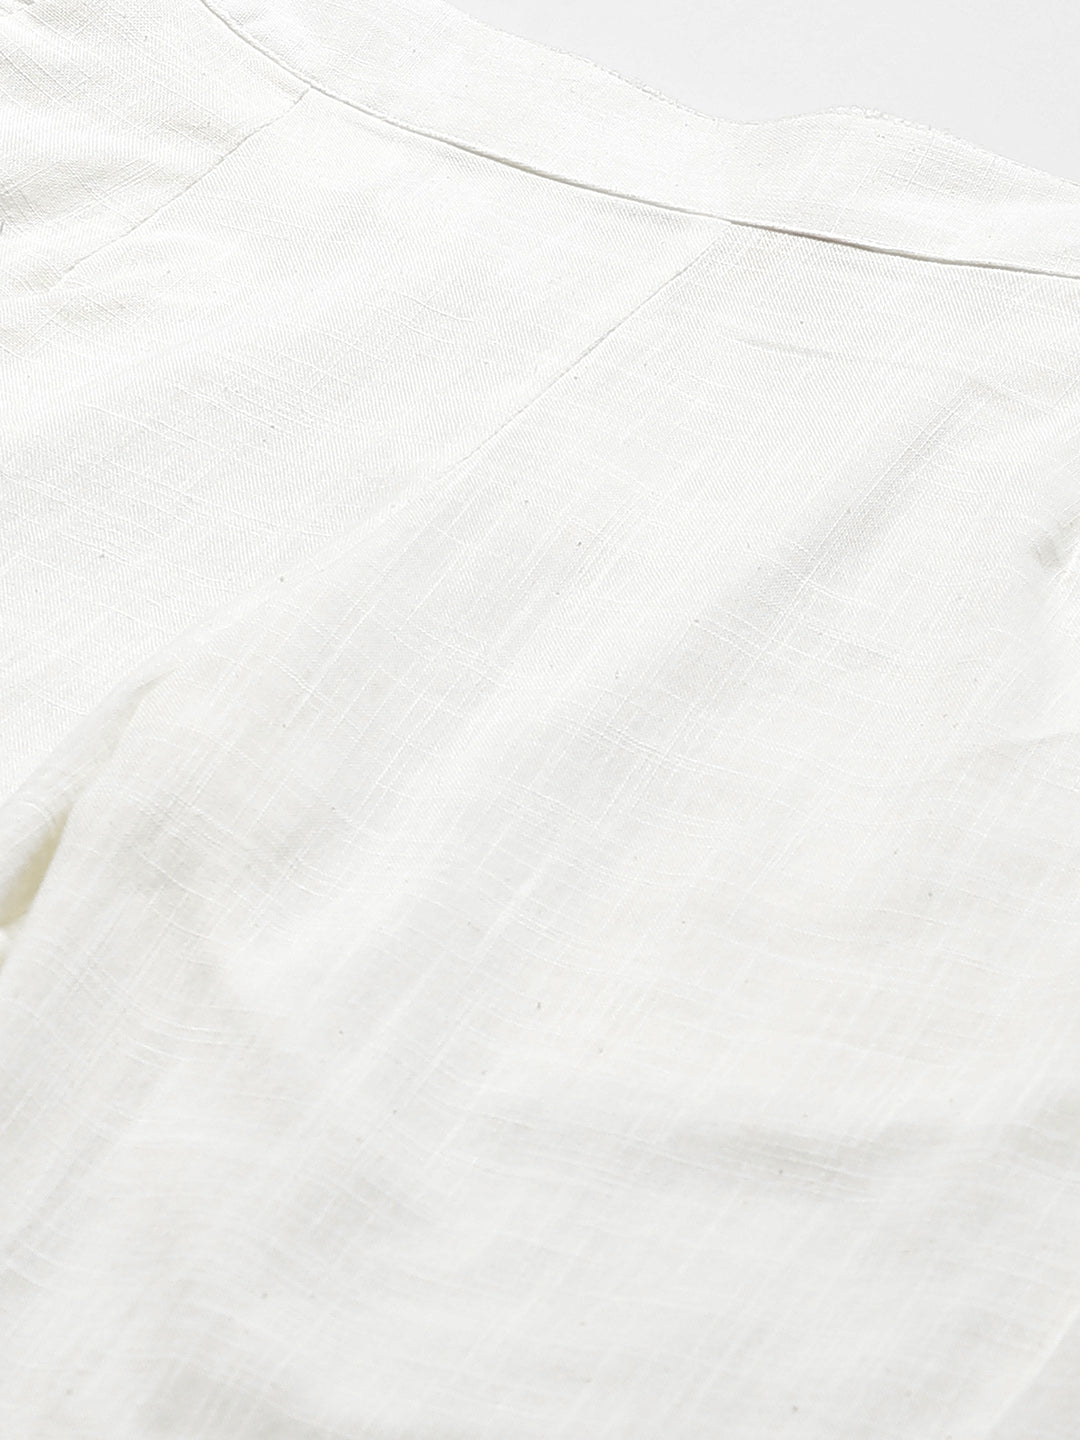 Divena Women Off-White Comfort Regular Fit Solid Cotton Cigarette Trousers